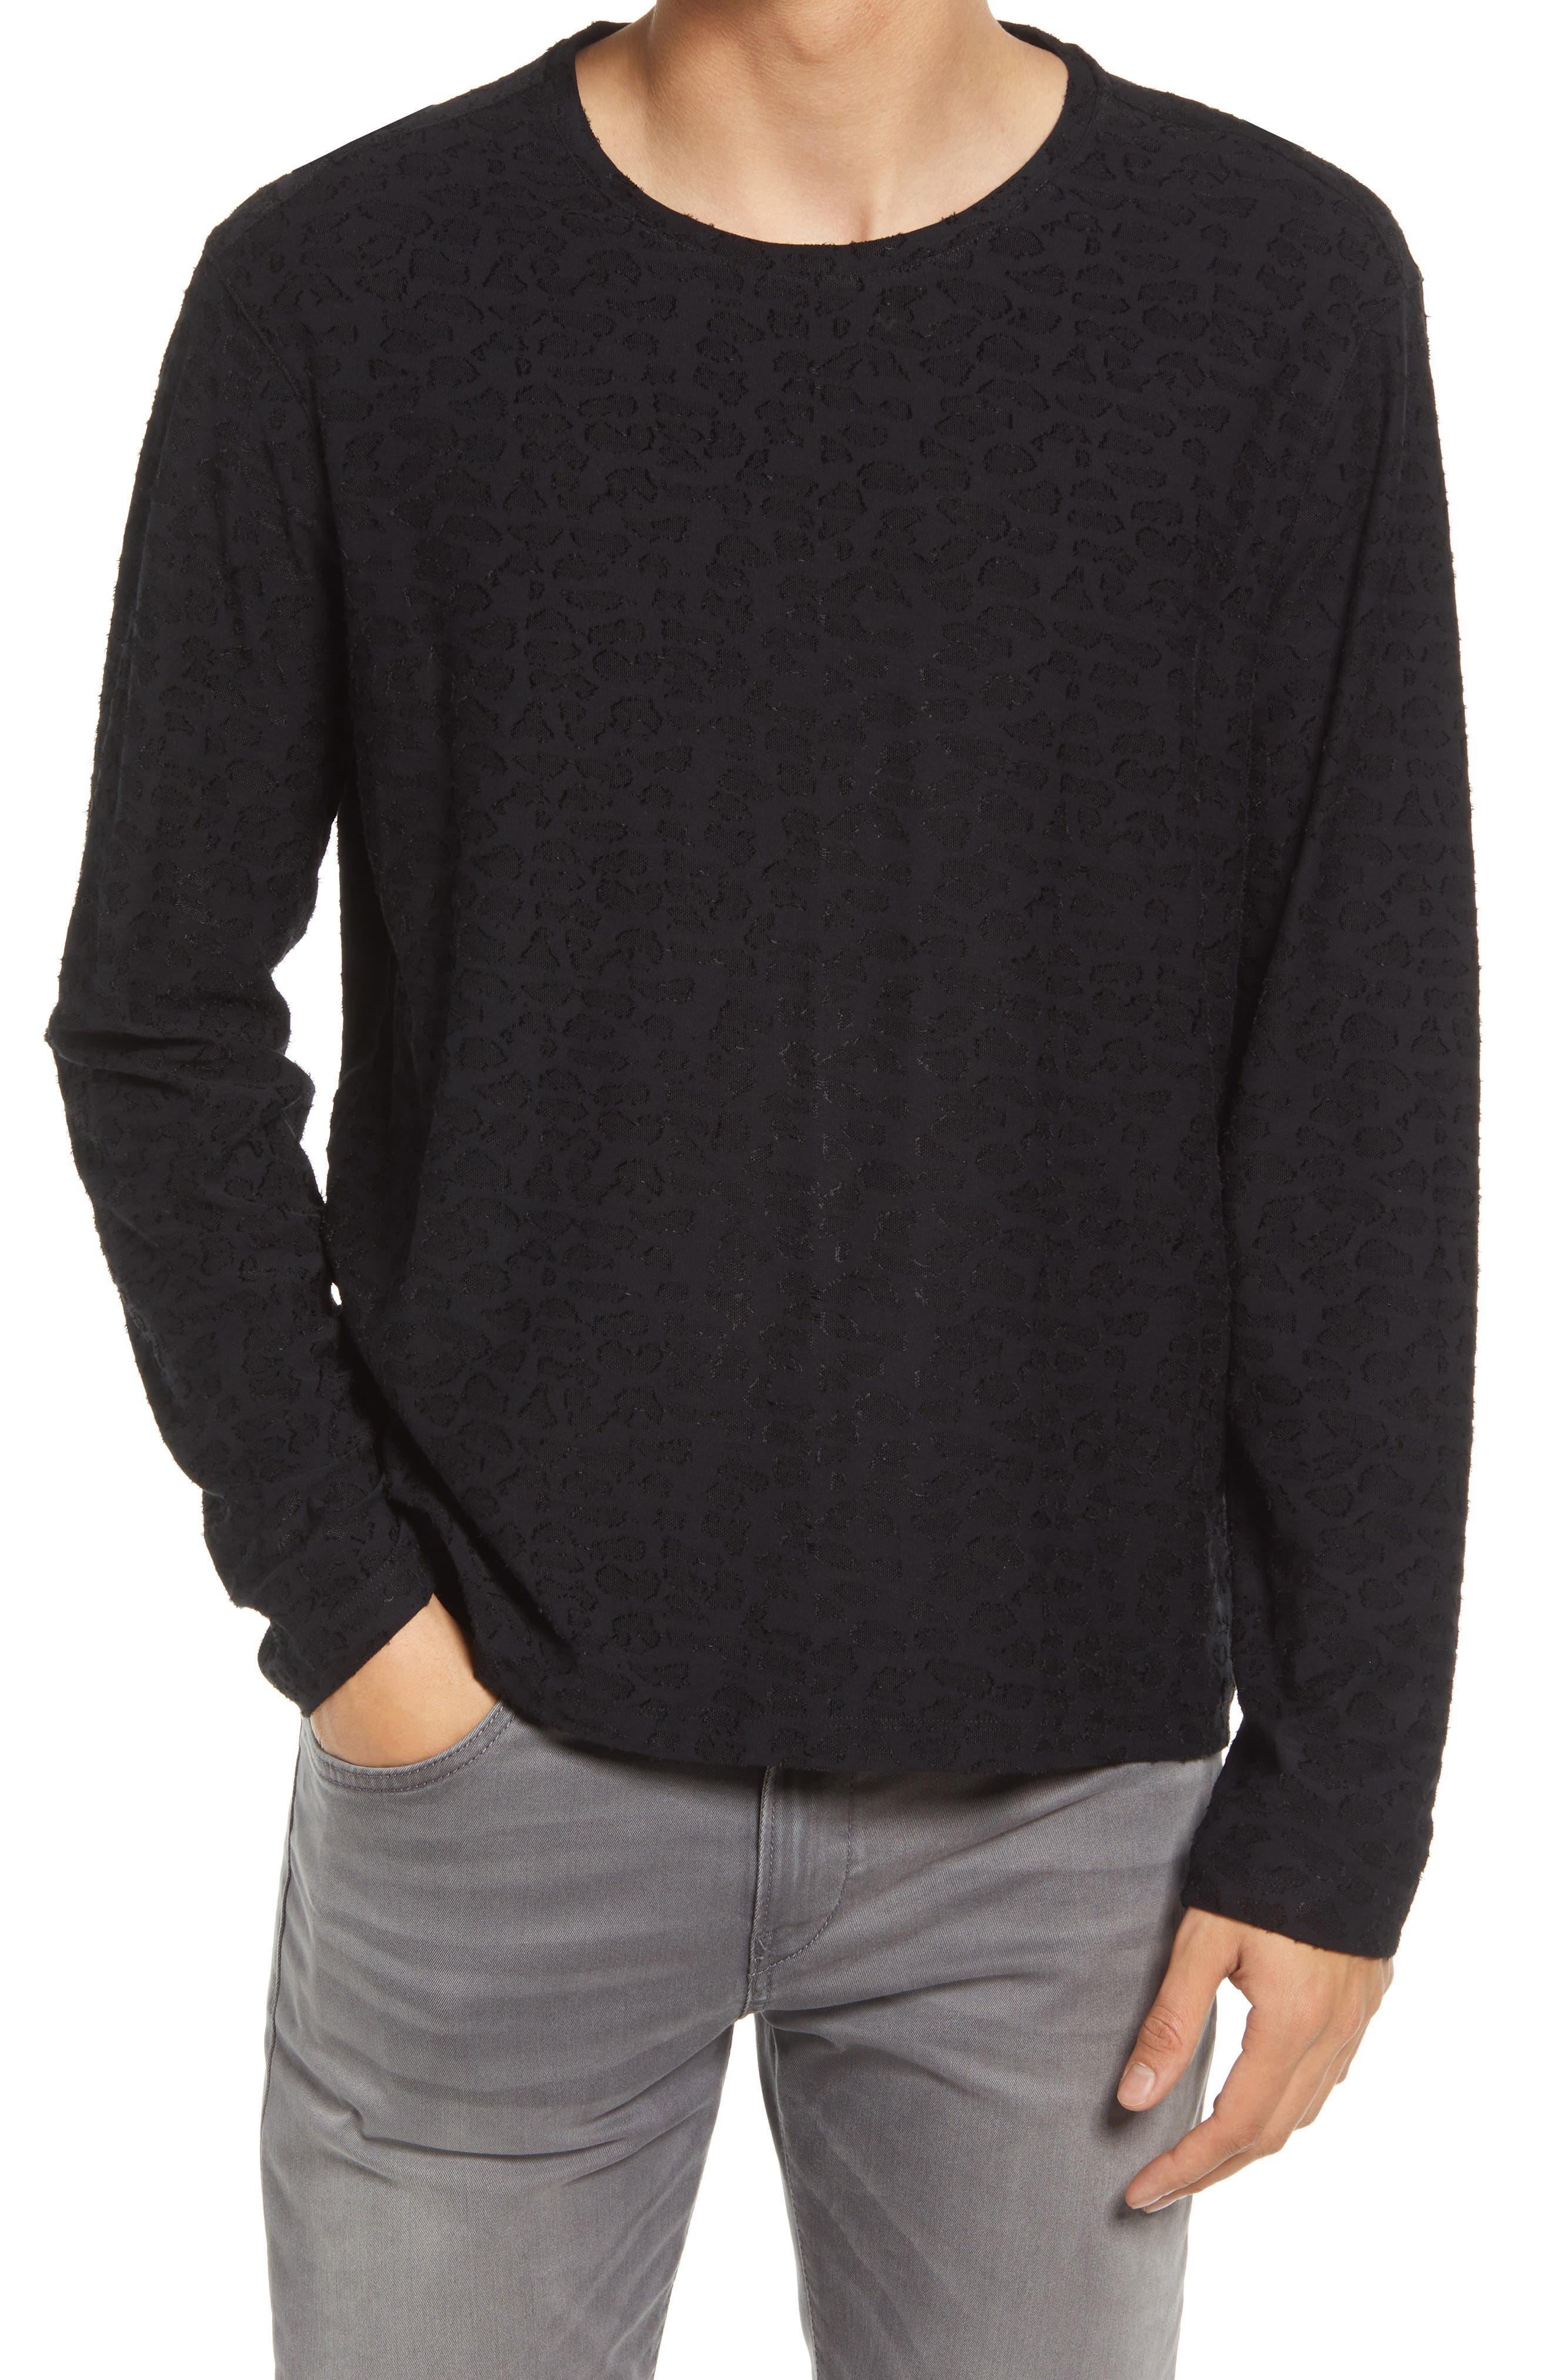 NWOT JOHN VARVATOS Grey Pullover Knit Top Size M